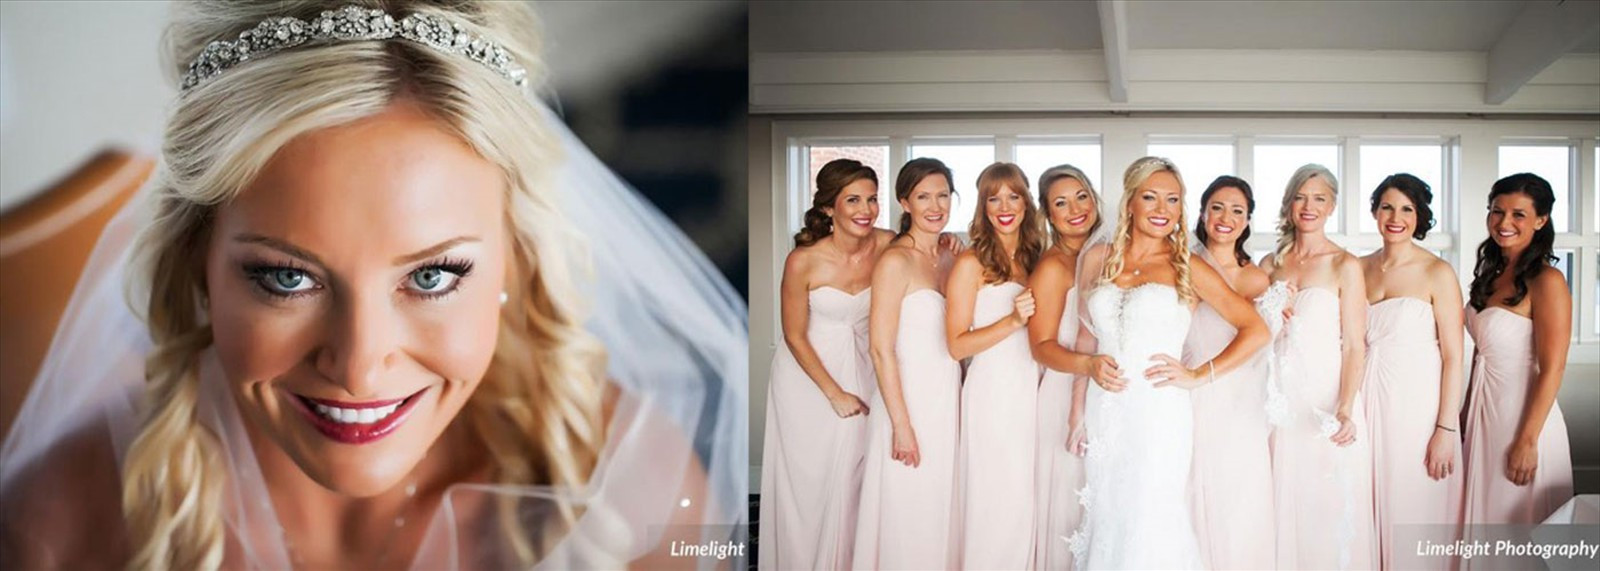 Wedding Hair And Makeup Tampa
 Bridal Hair & Makeup Artist Tampa – Mobile Salon for Weddings